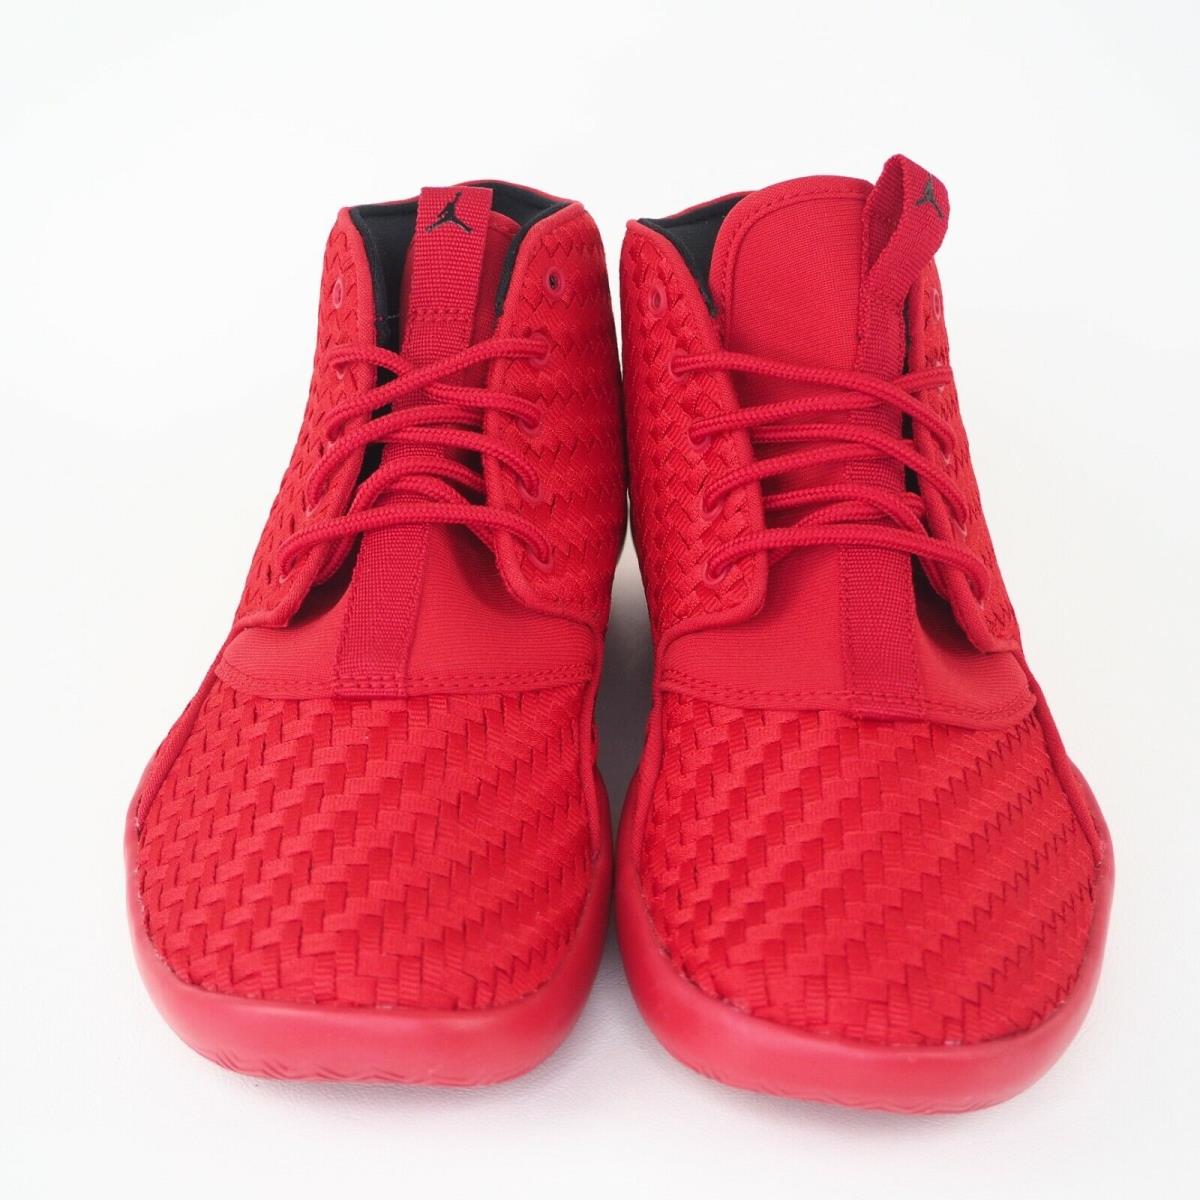 Nike Air Eclipse Chukka Woven BG 881461 601 Boys Shoes Red Basketball ...